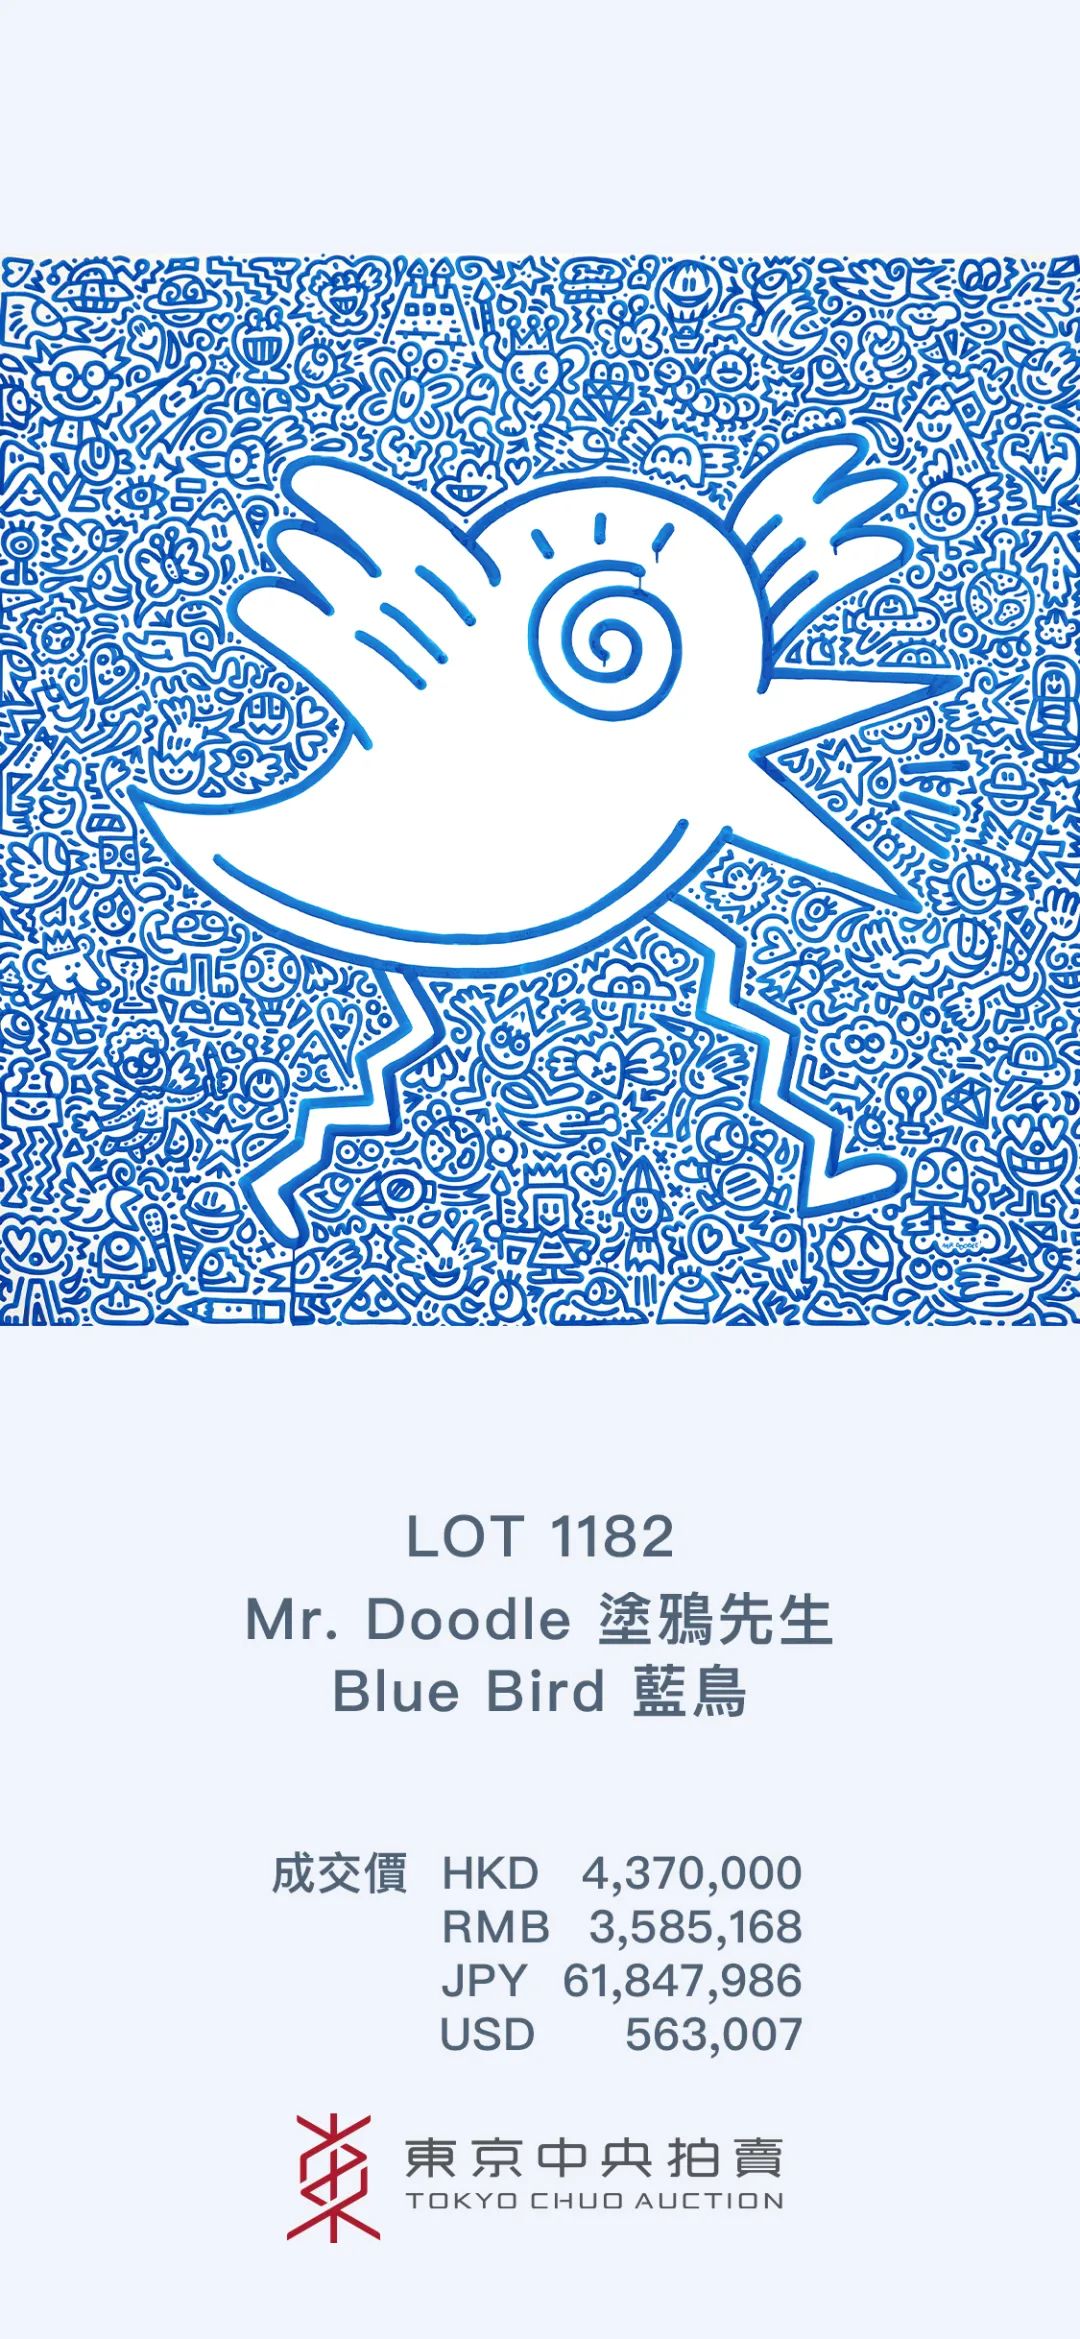 Lot 1182 Mr.Doodle 塗鴉先生 Blue Bird 藍鳥